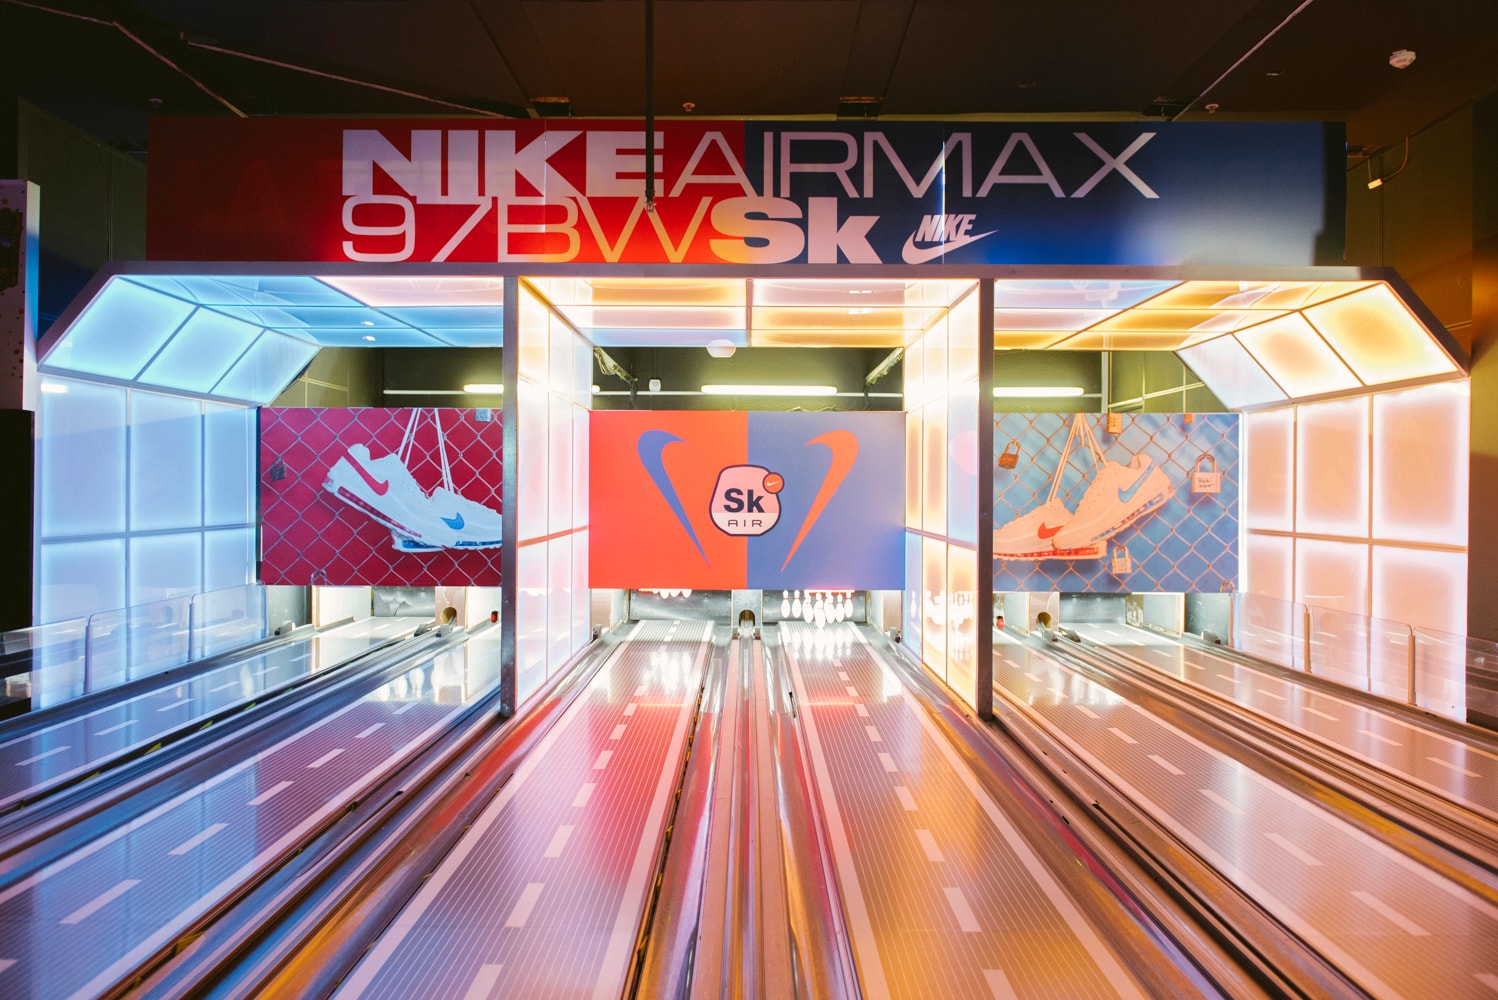 直擊 Skepta x Nike Air Max 97 BW 巴黎發佈派對現場